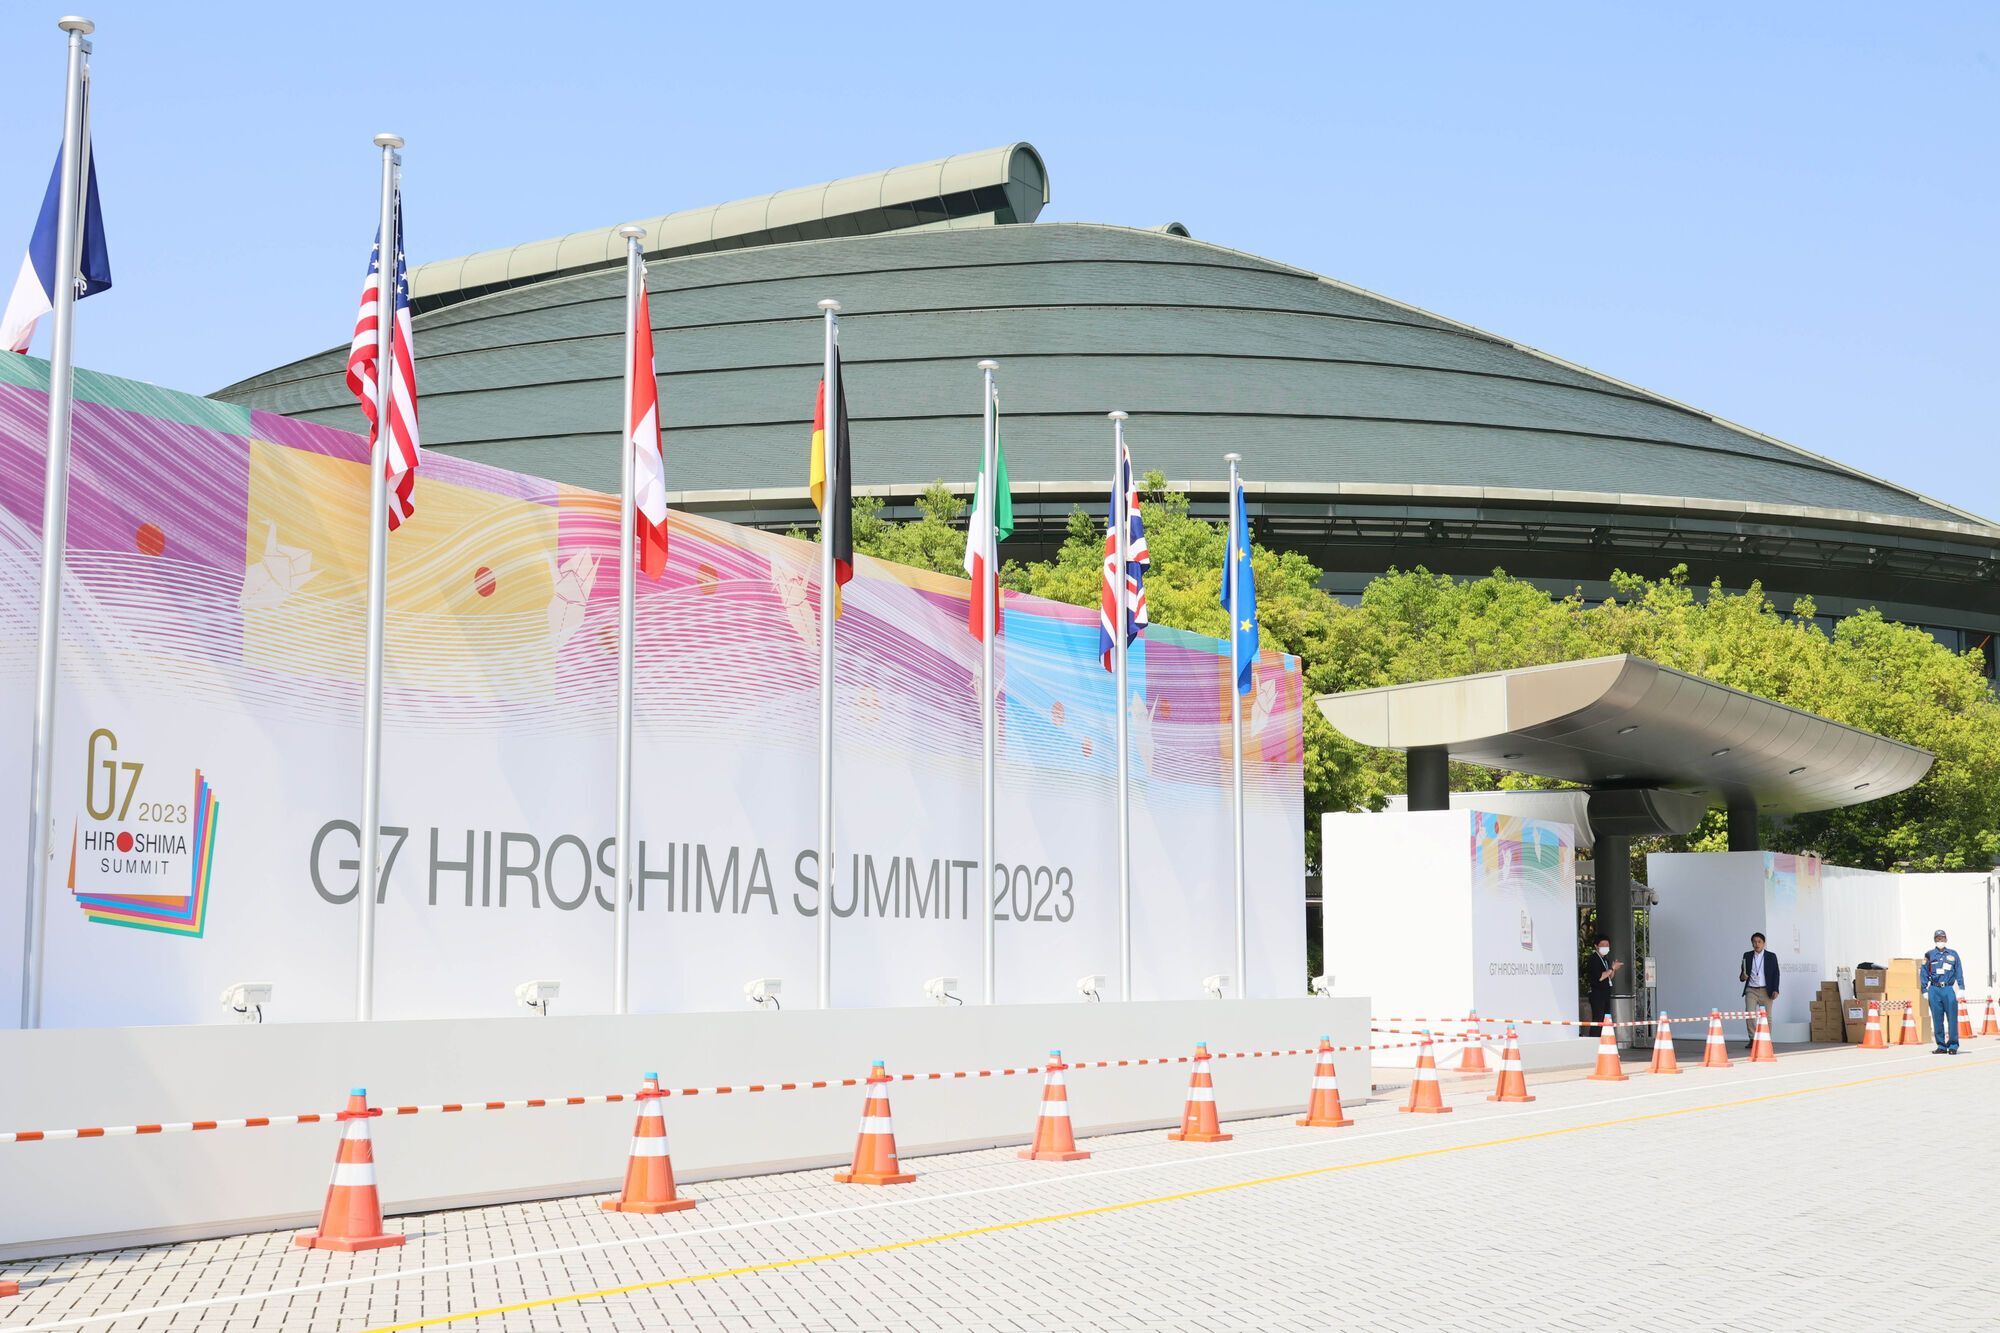 G7 Summit in Japan